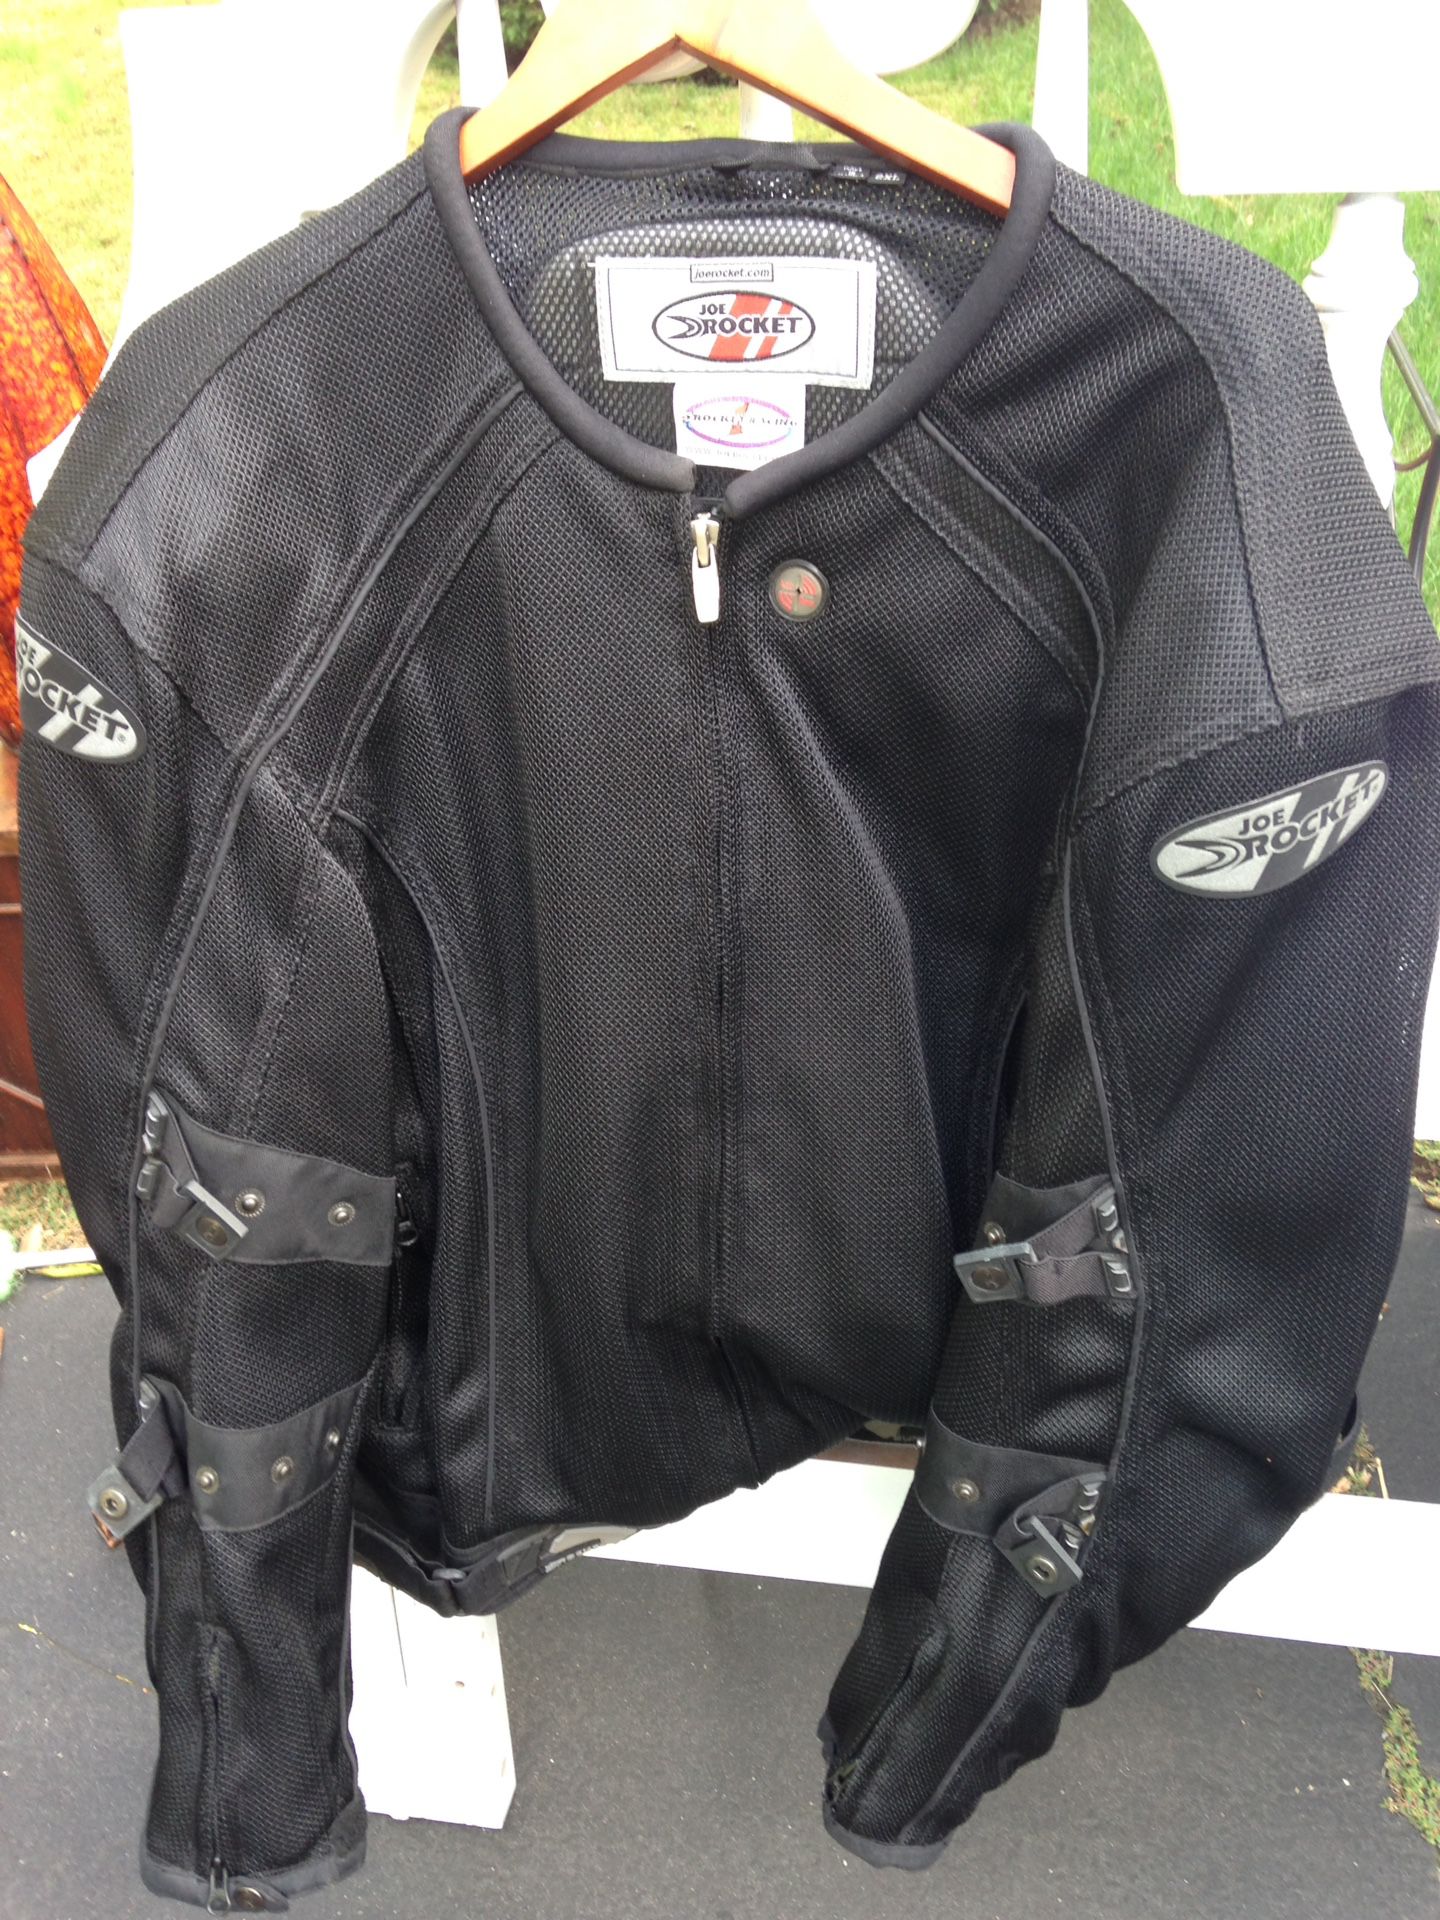 Joe rocket Motorcycle jacket with Harley Davidson logos